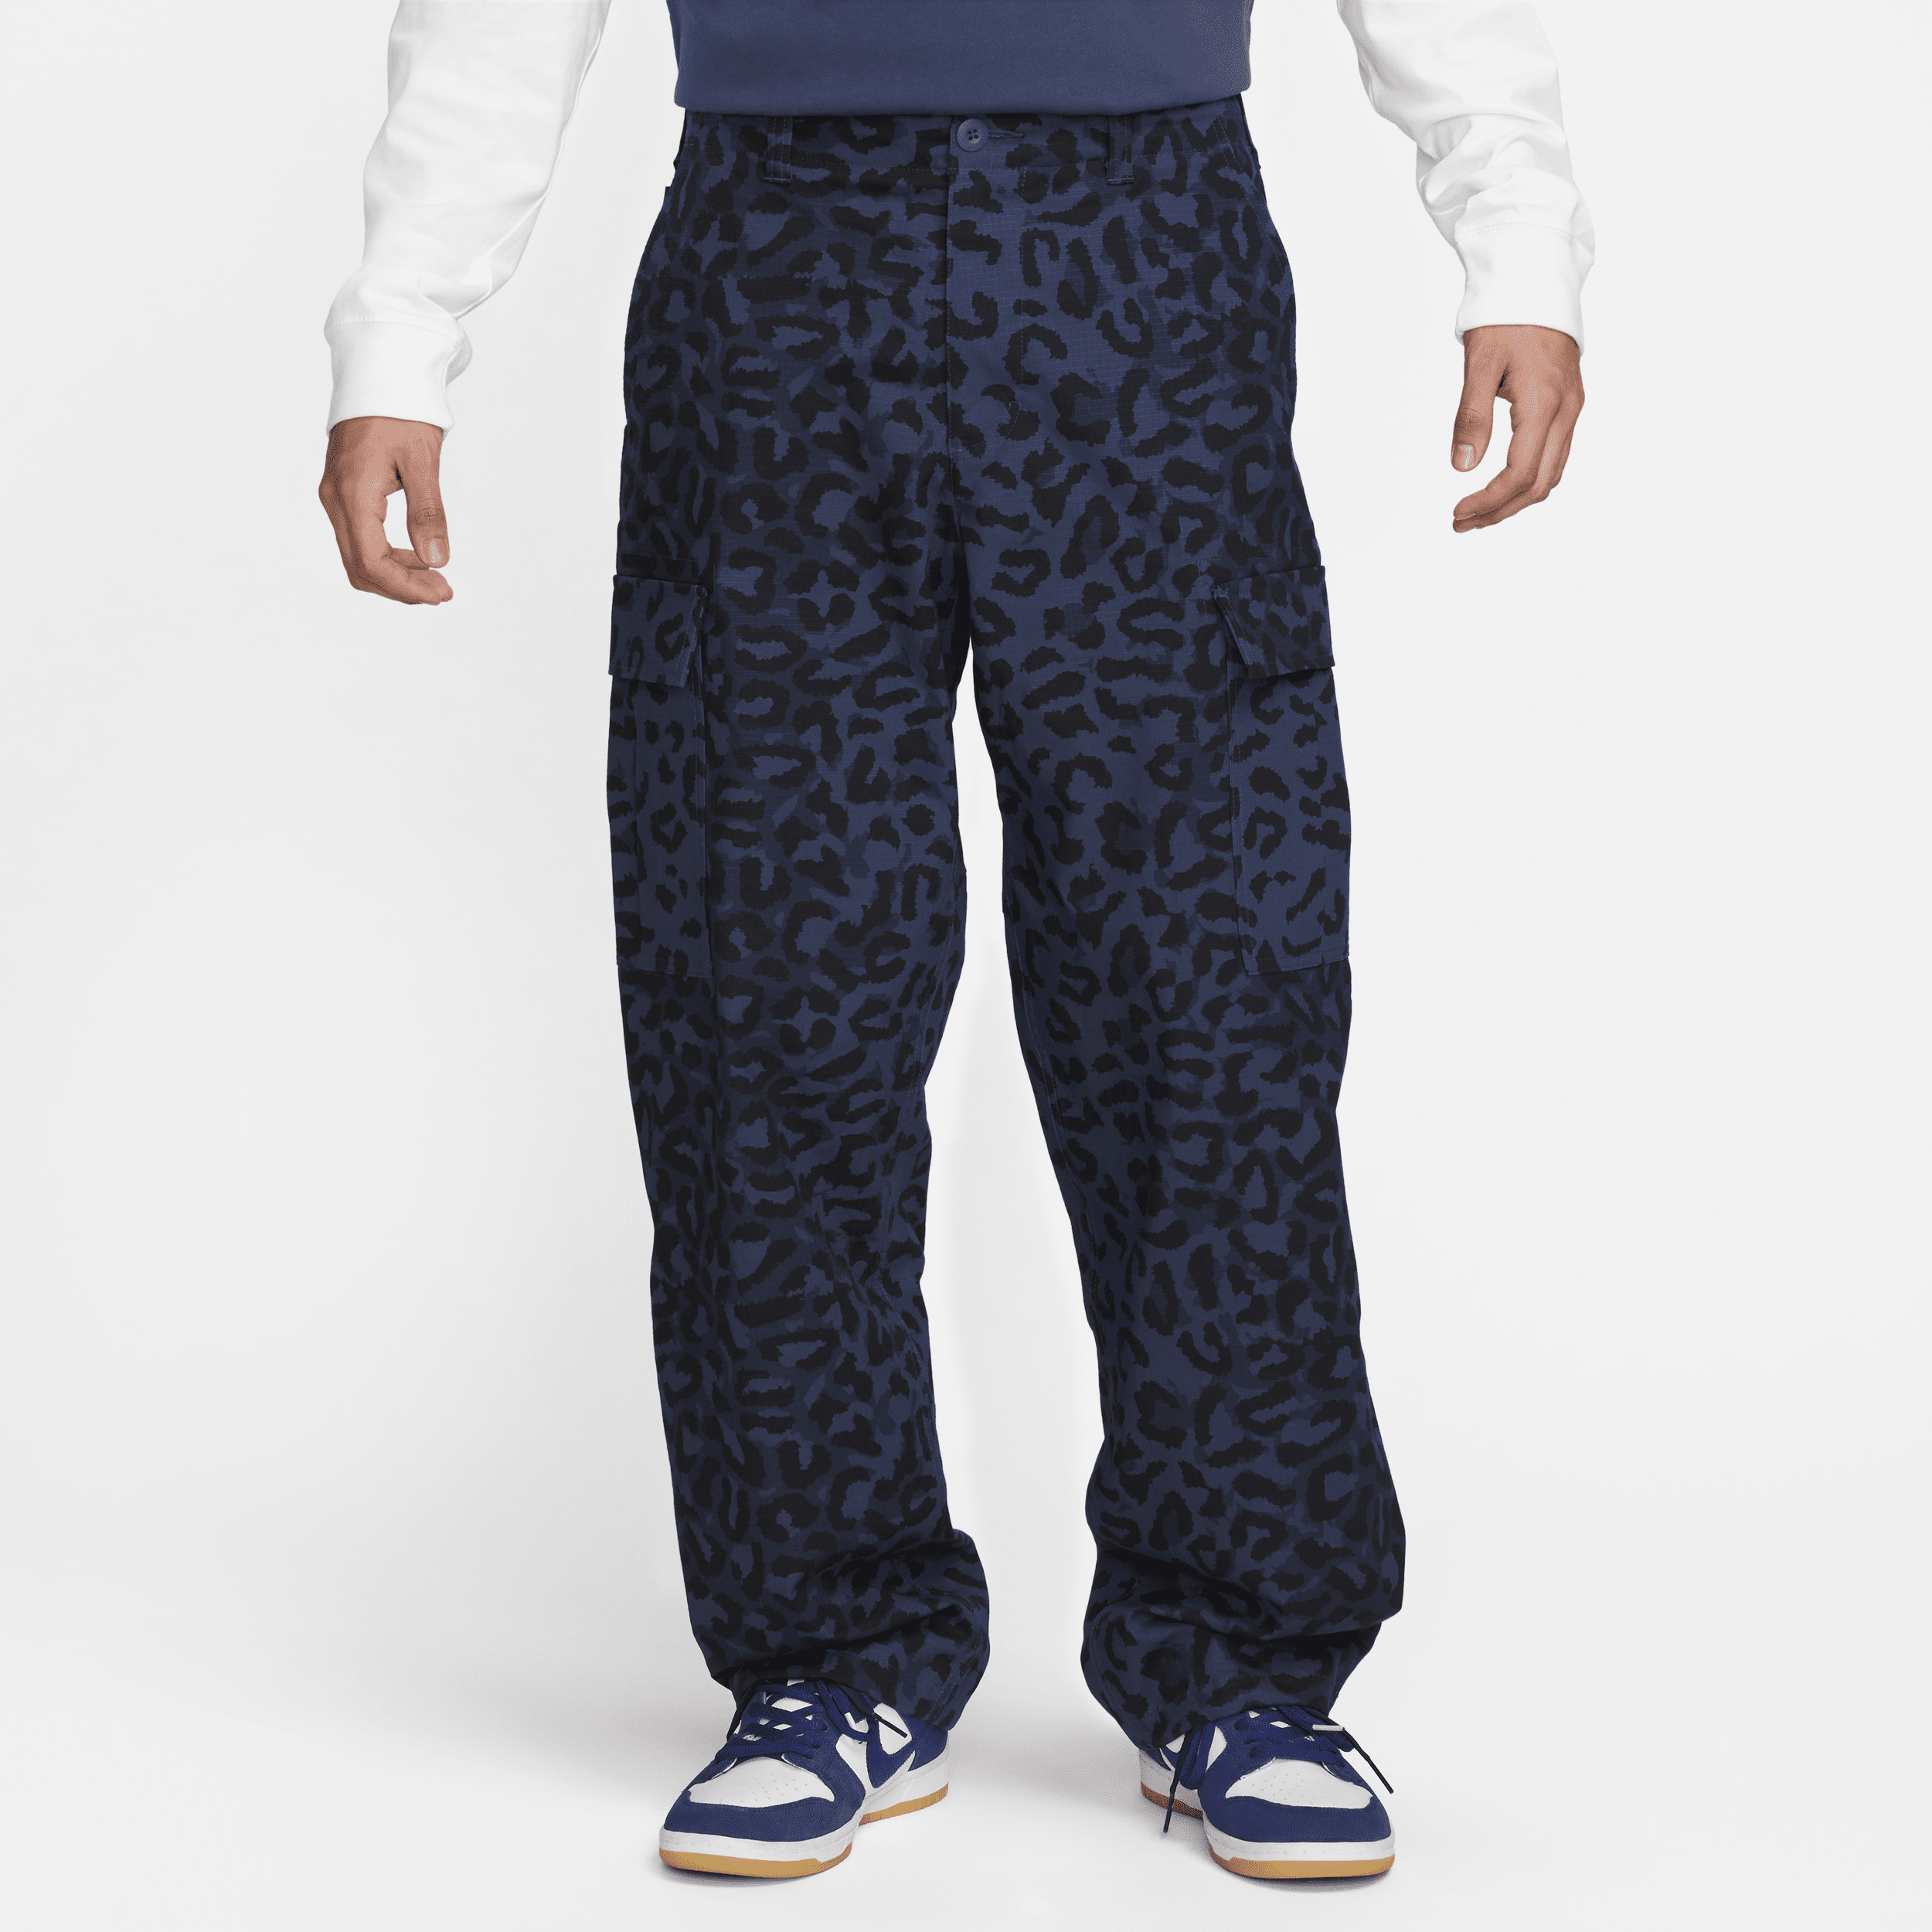 Nike SB Kearny cargobroek met volledige print voor heren - Blauw